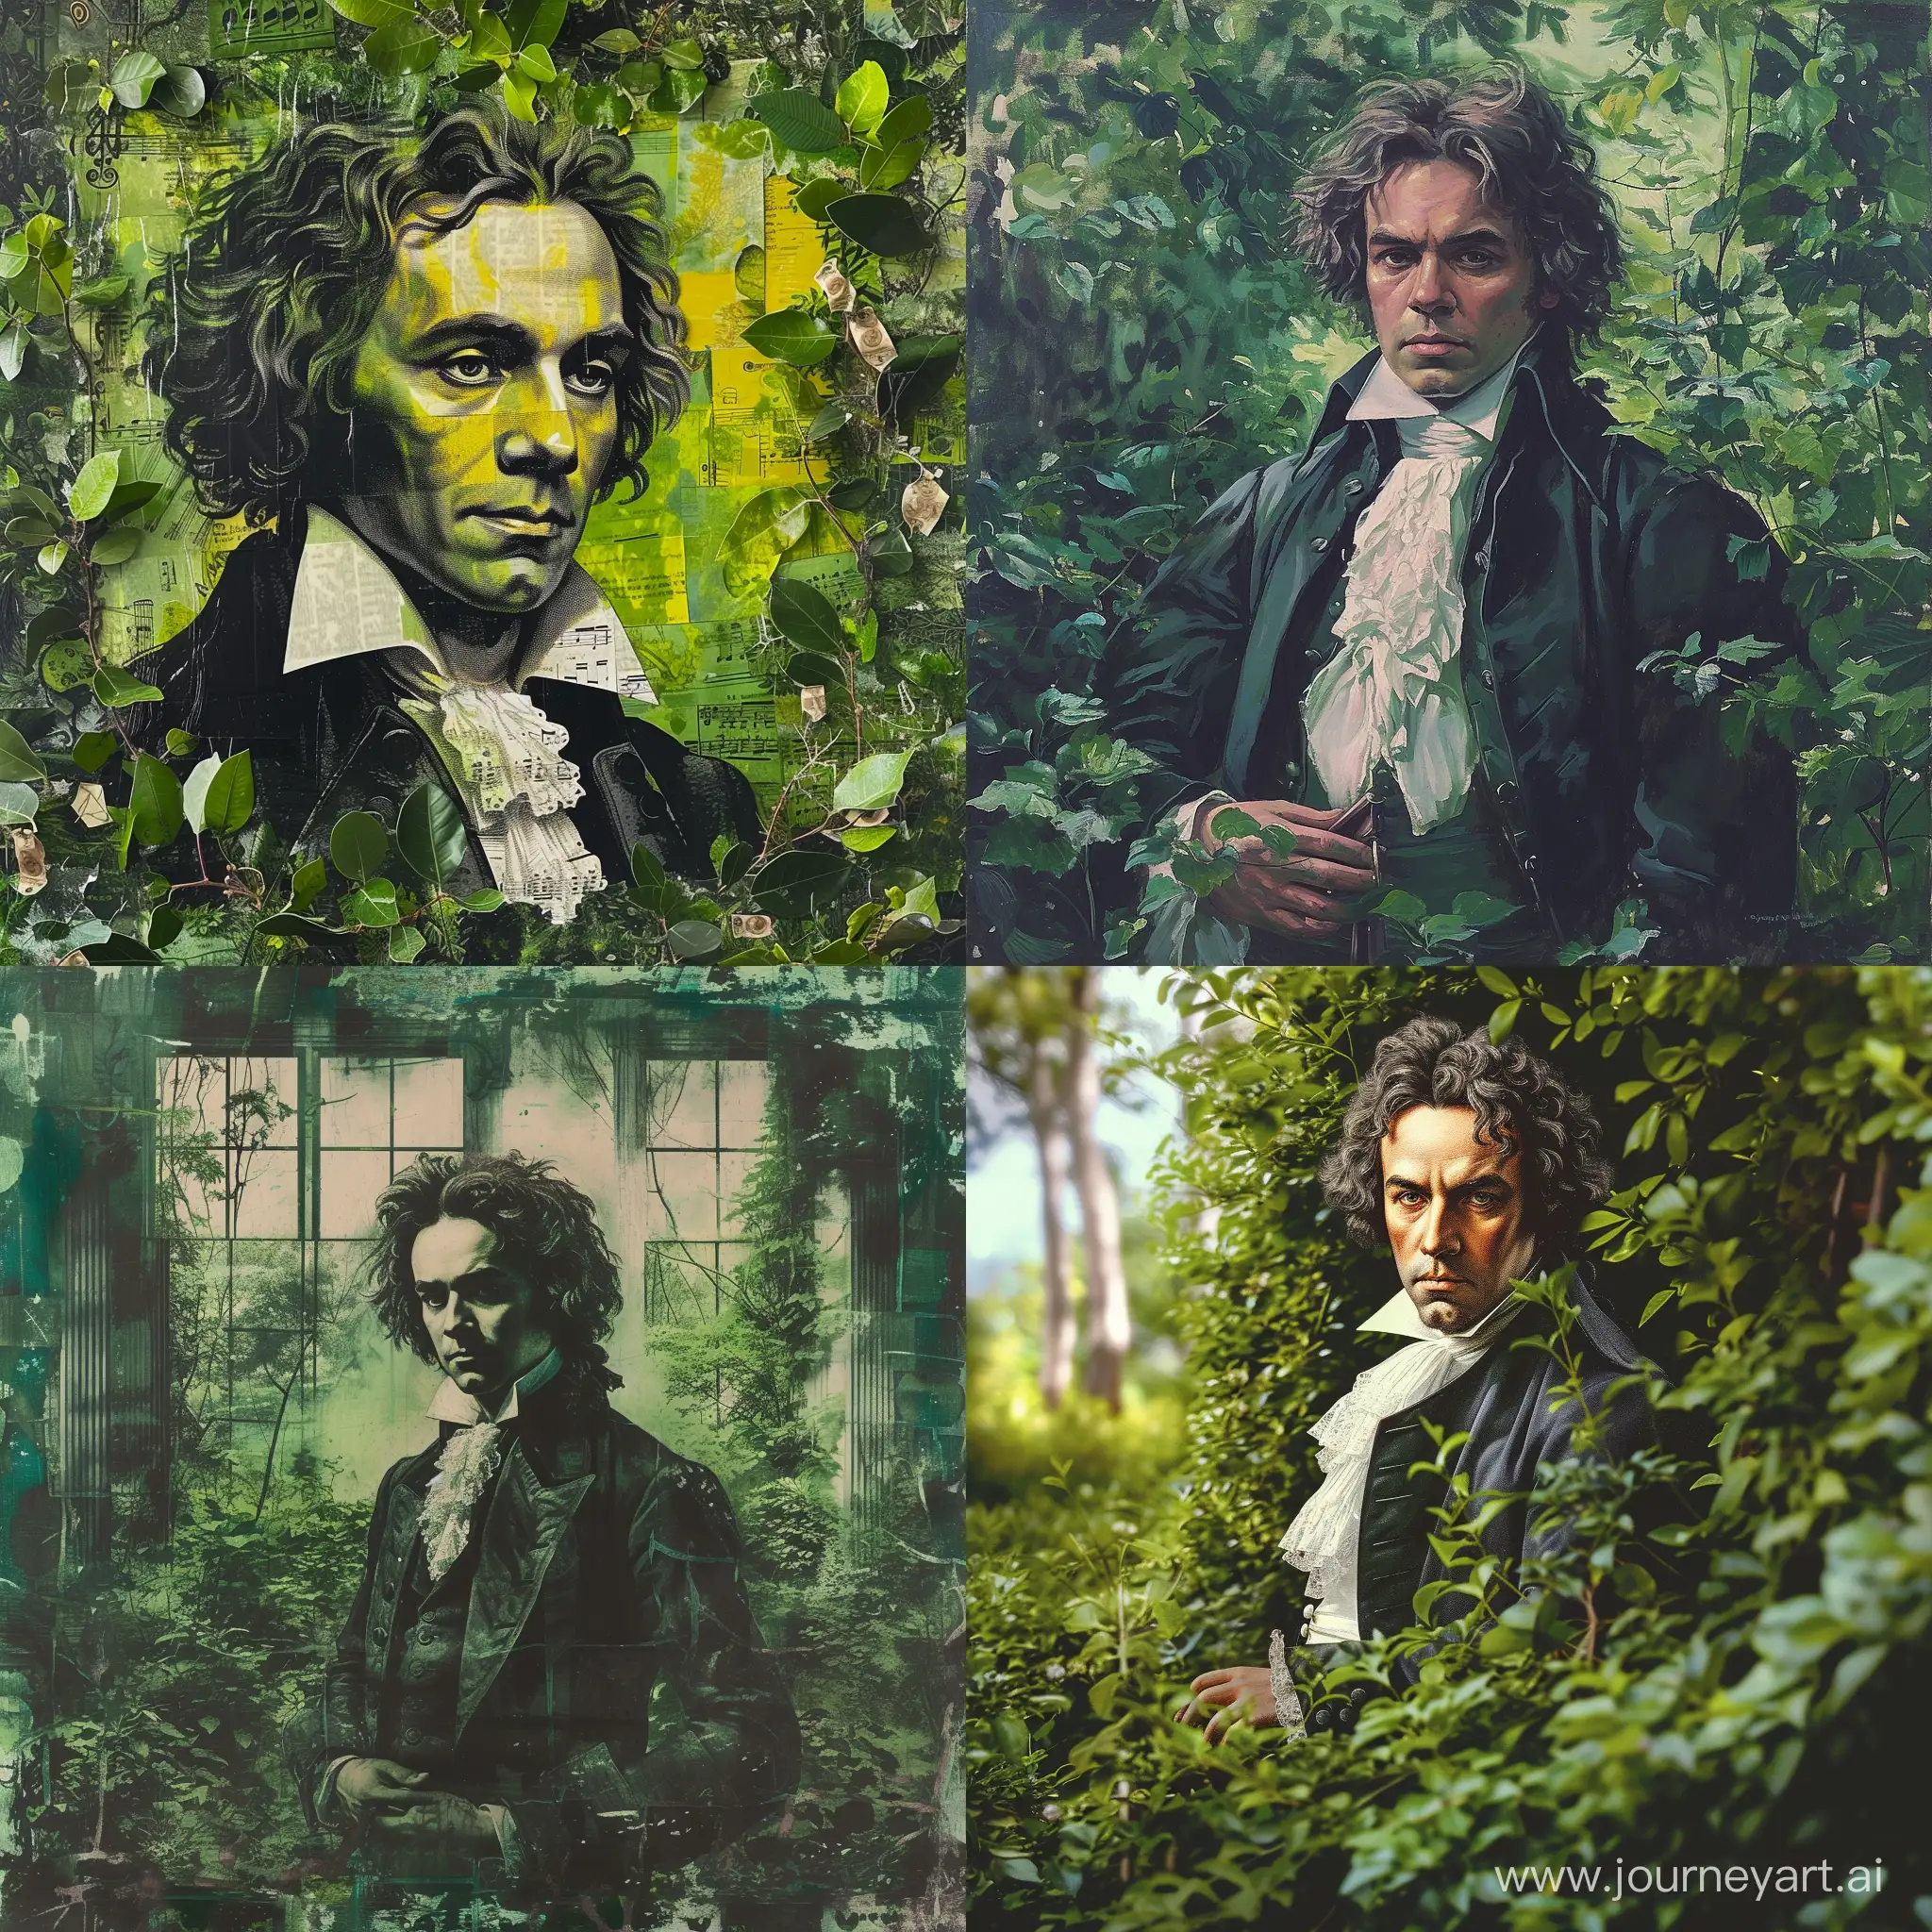 Ludwig-van-Beethoven-Serenading-in-a-Vibrant-Green-Garden